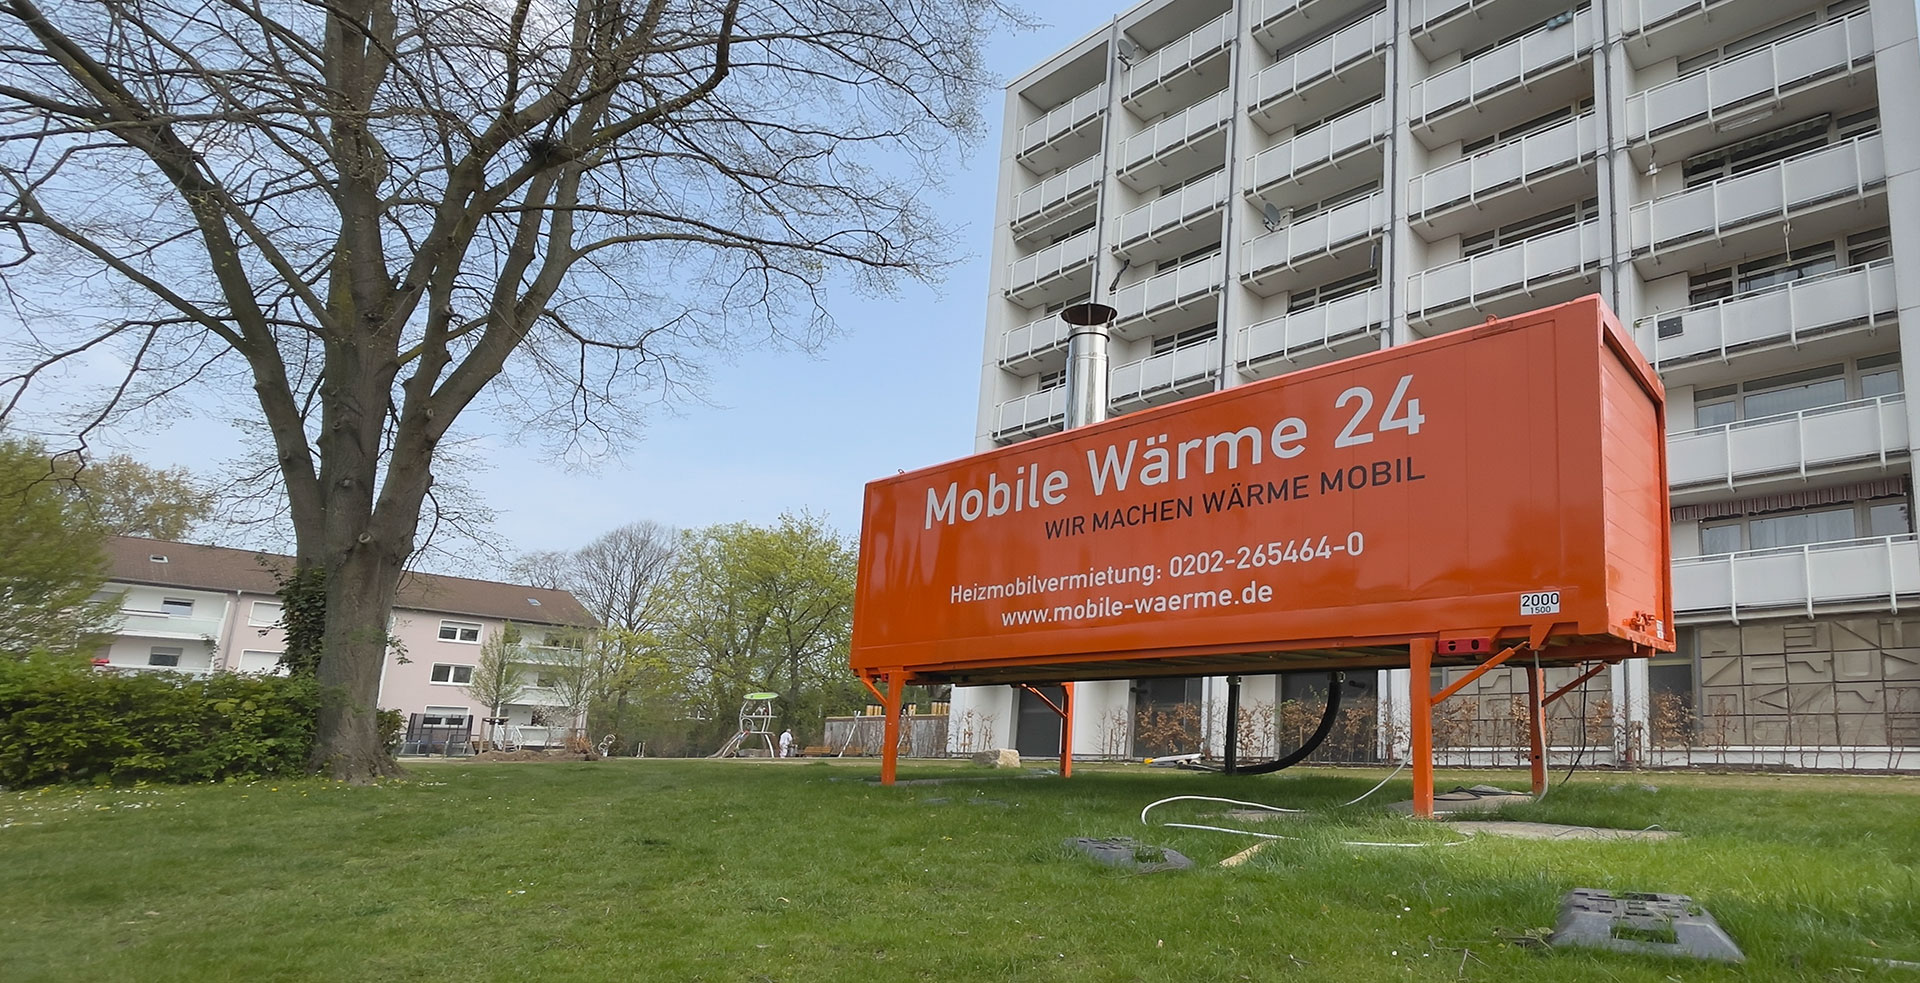 (c) Mobile-waerme24.de